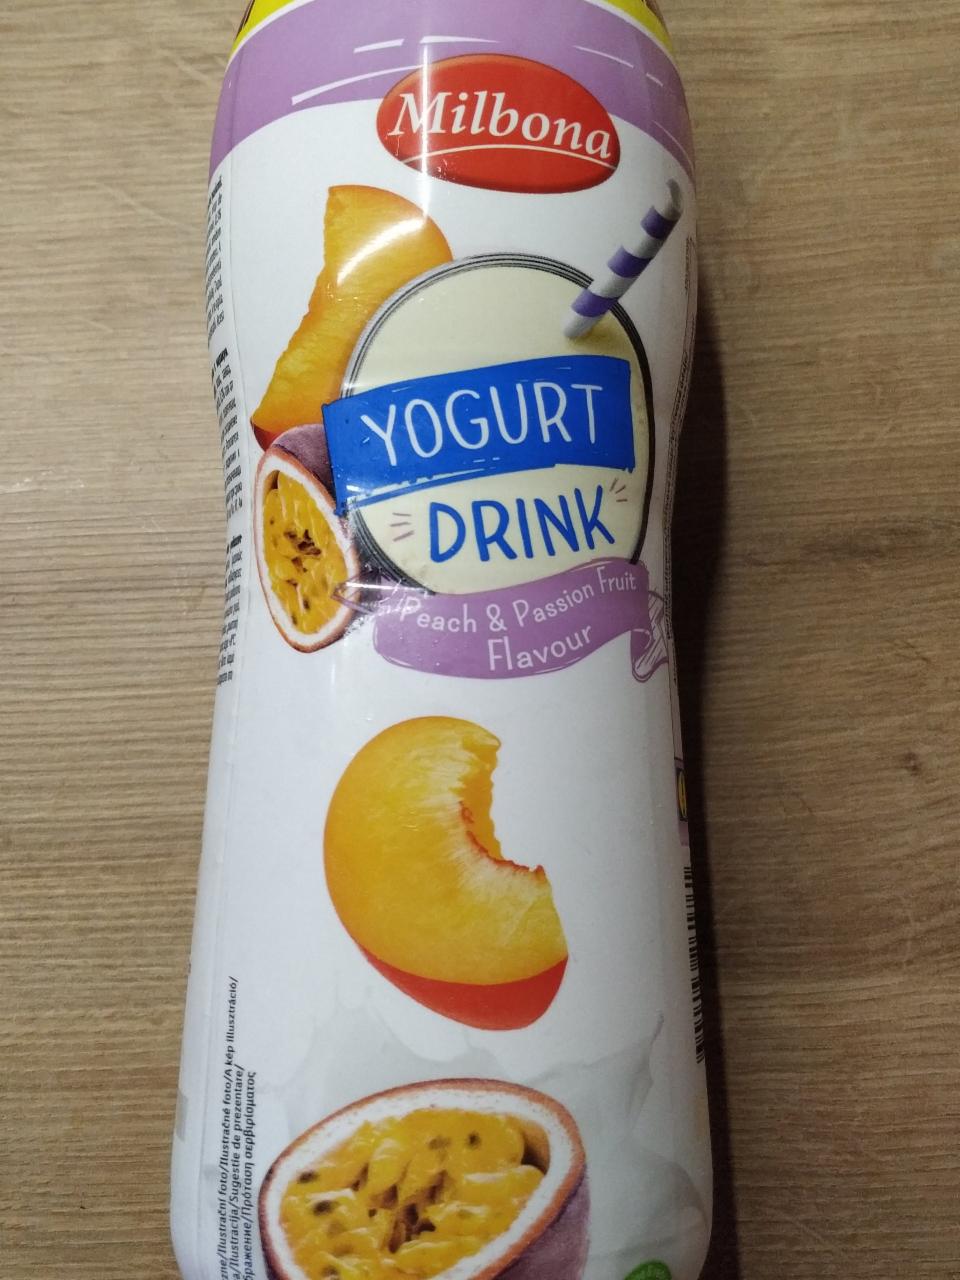 Képek - Yogurt drink Peach & passion fruit Milbona